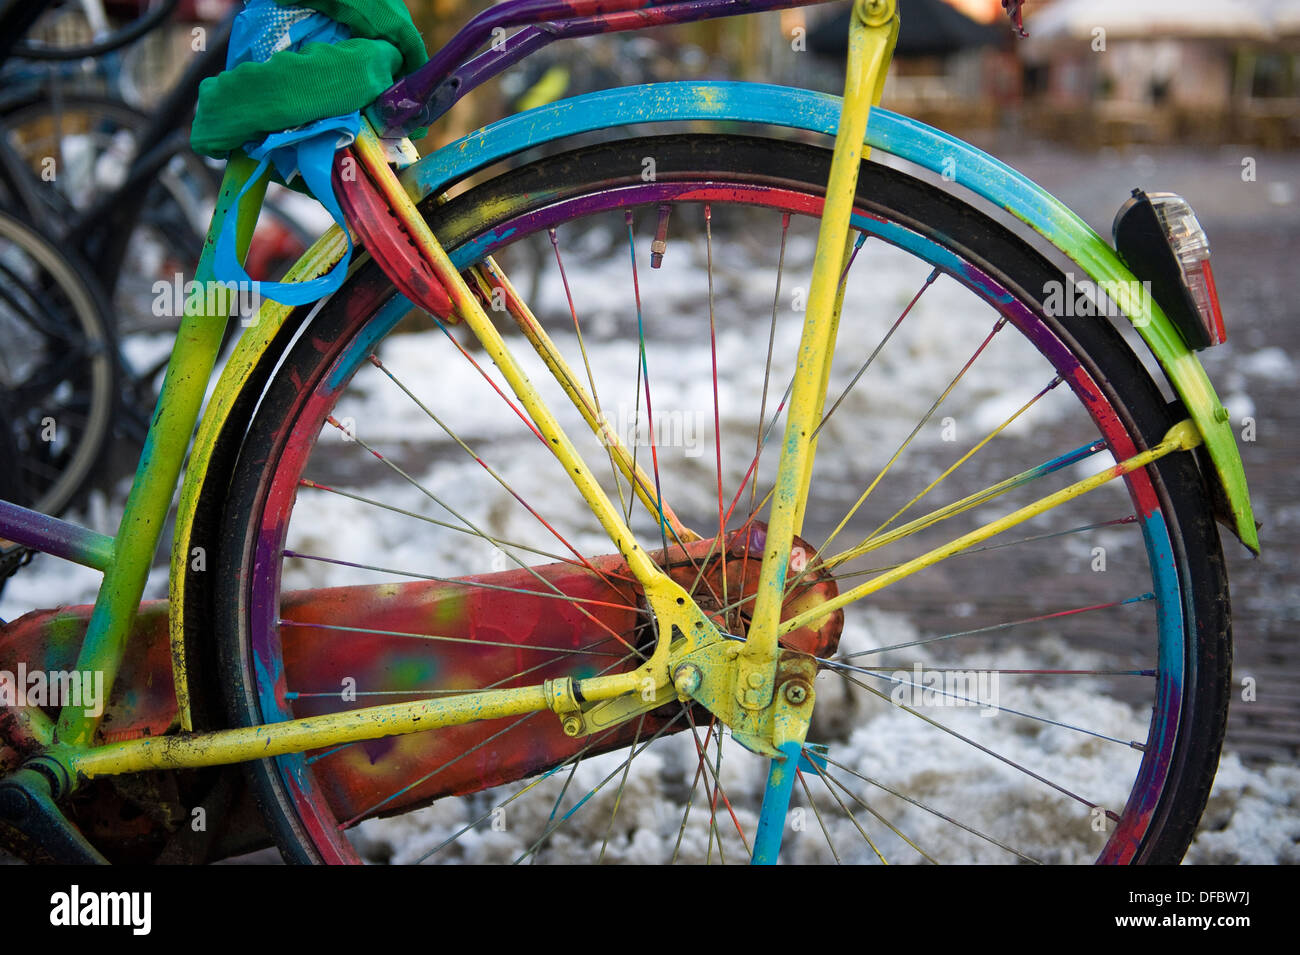 Bicicletta olandese dipinte in colori diversi, closeup dettaglio, Amersfoort, Paesi Bassi Foto Stock